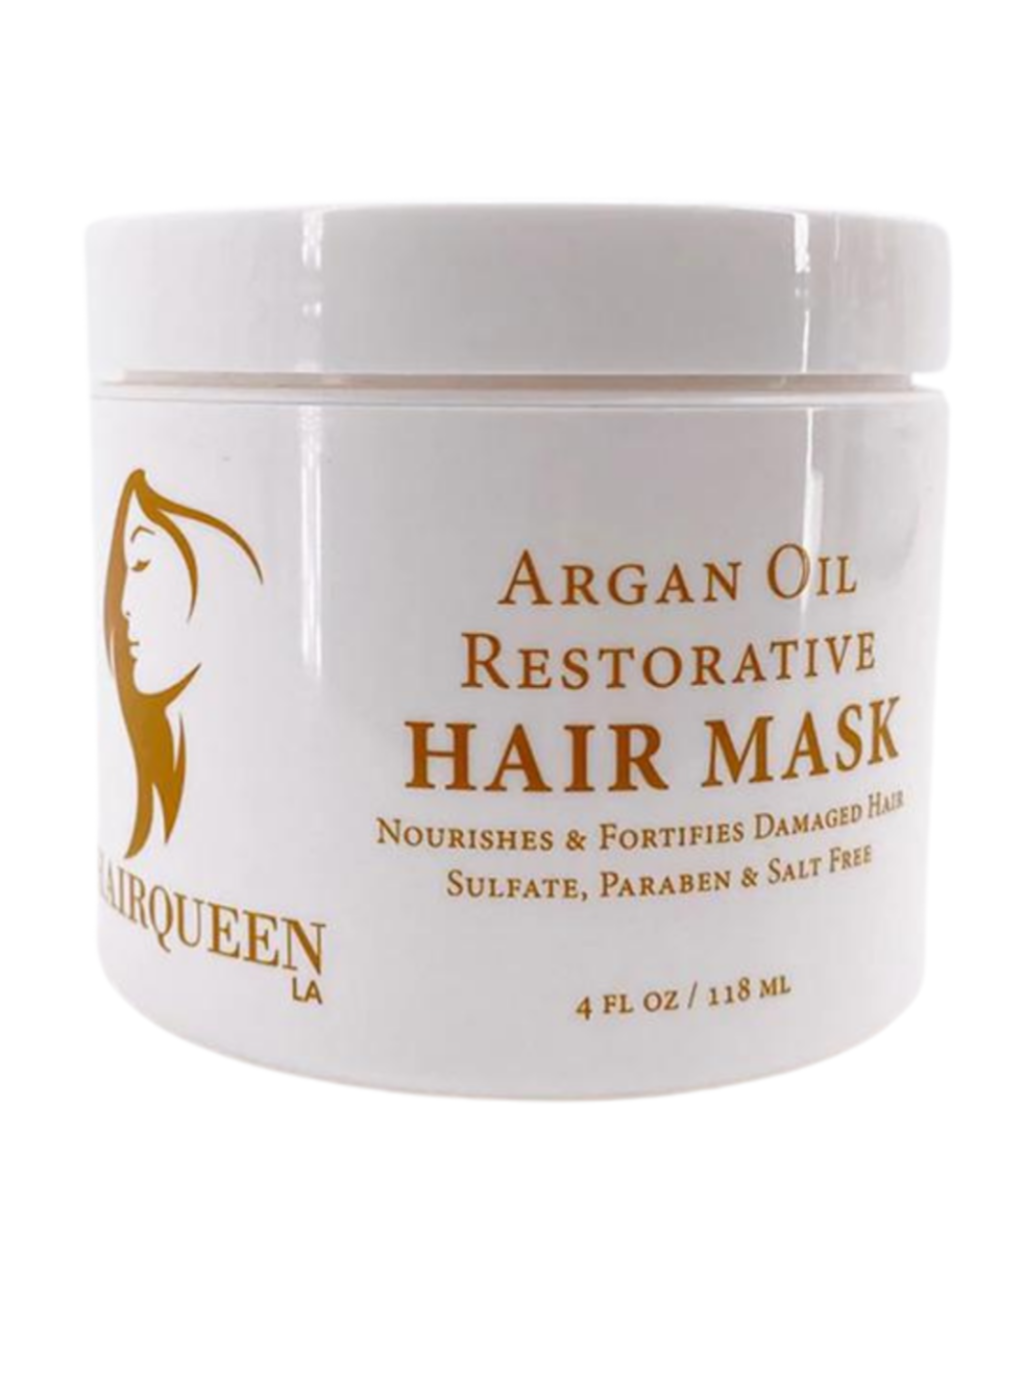 HQLA Argan Oil Restorative Hair Mask